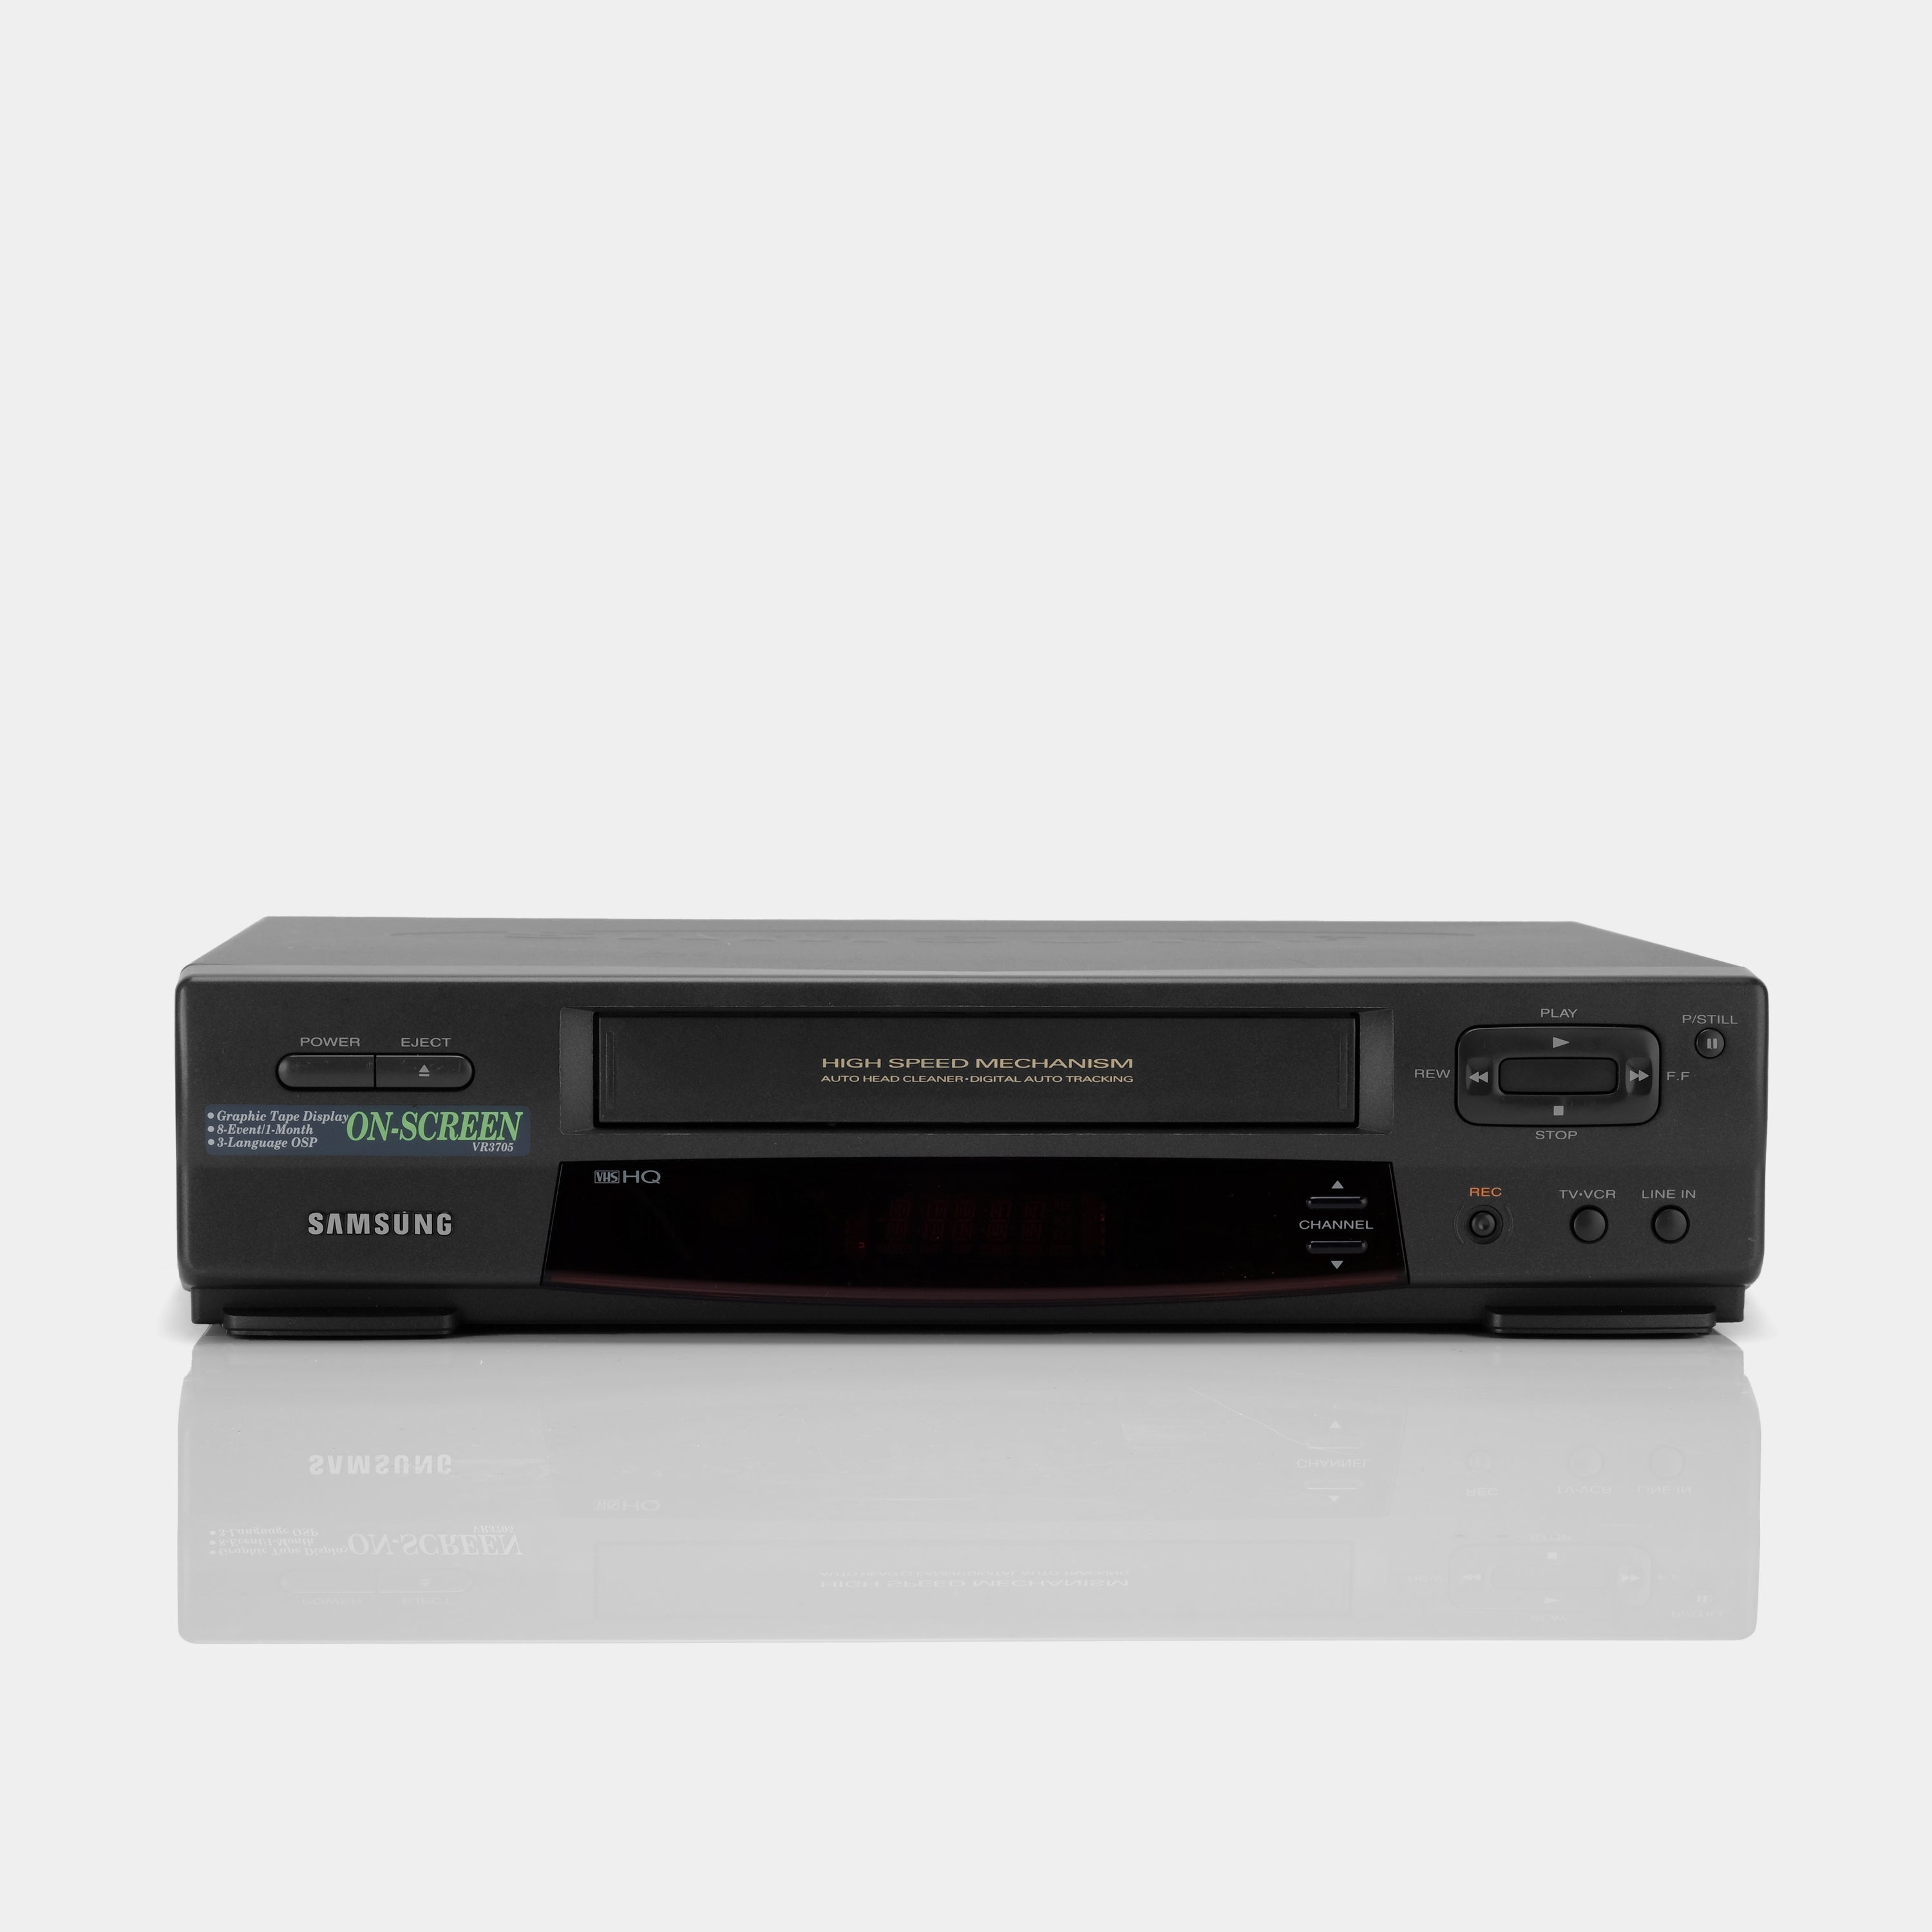 Samsung VR3705 VCR VHS Player